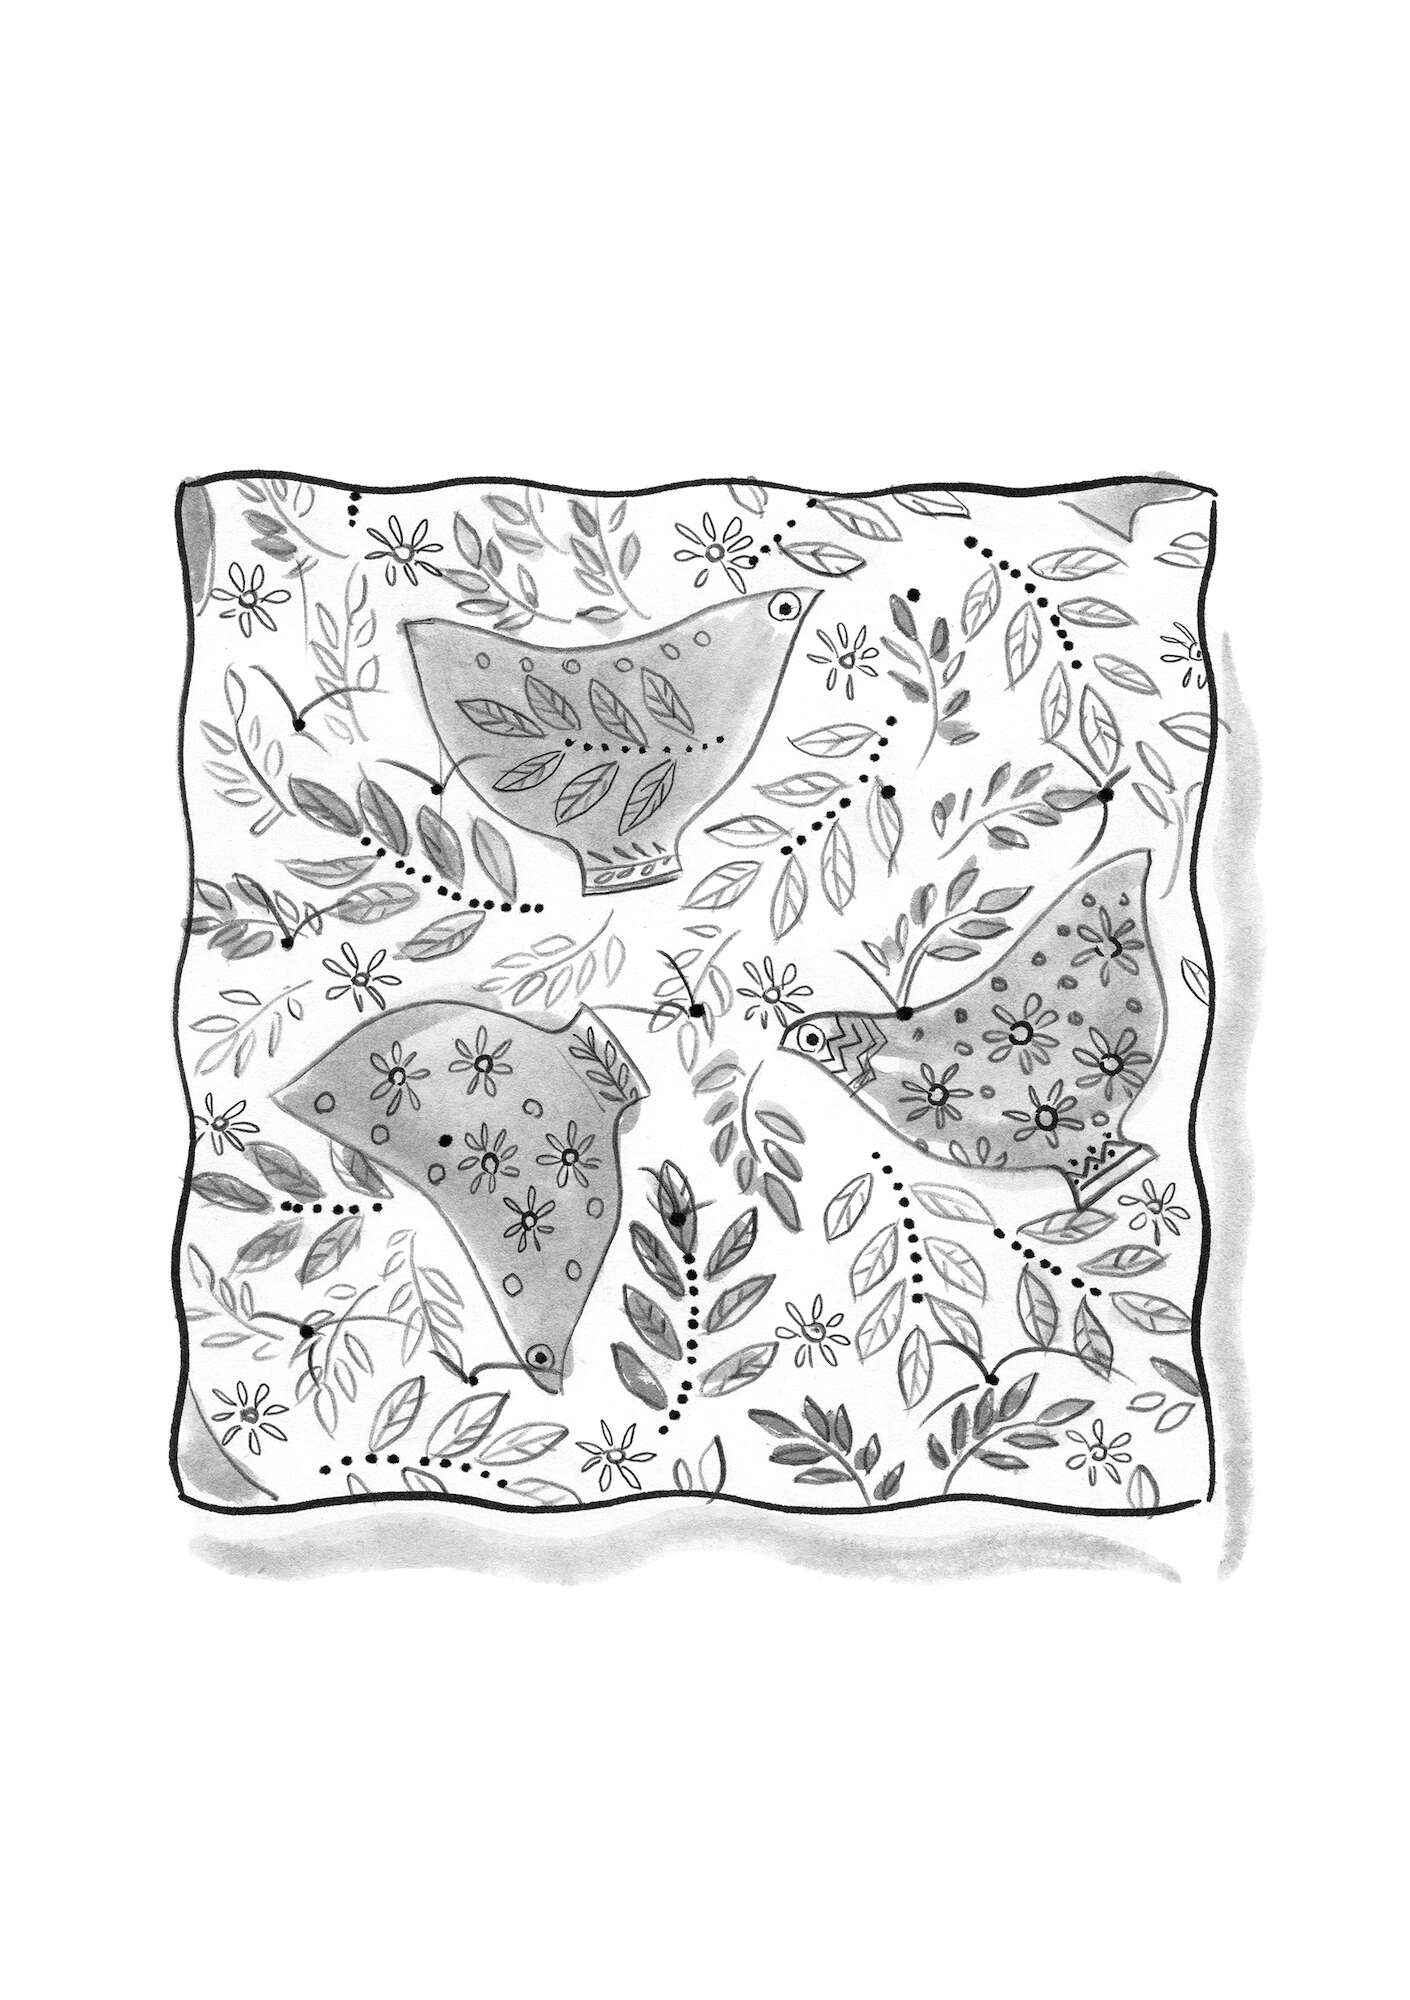 “Okarina” linen seat cushion indigofera